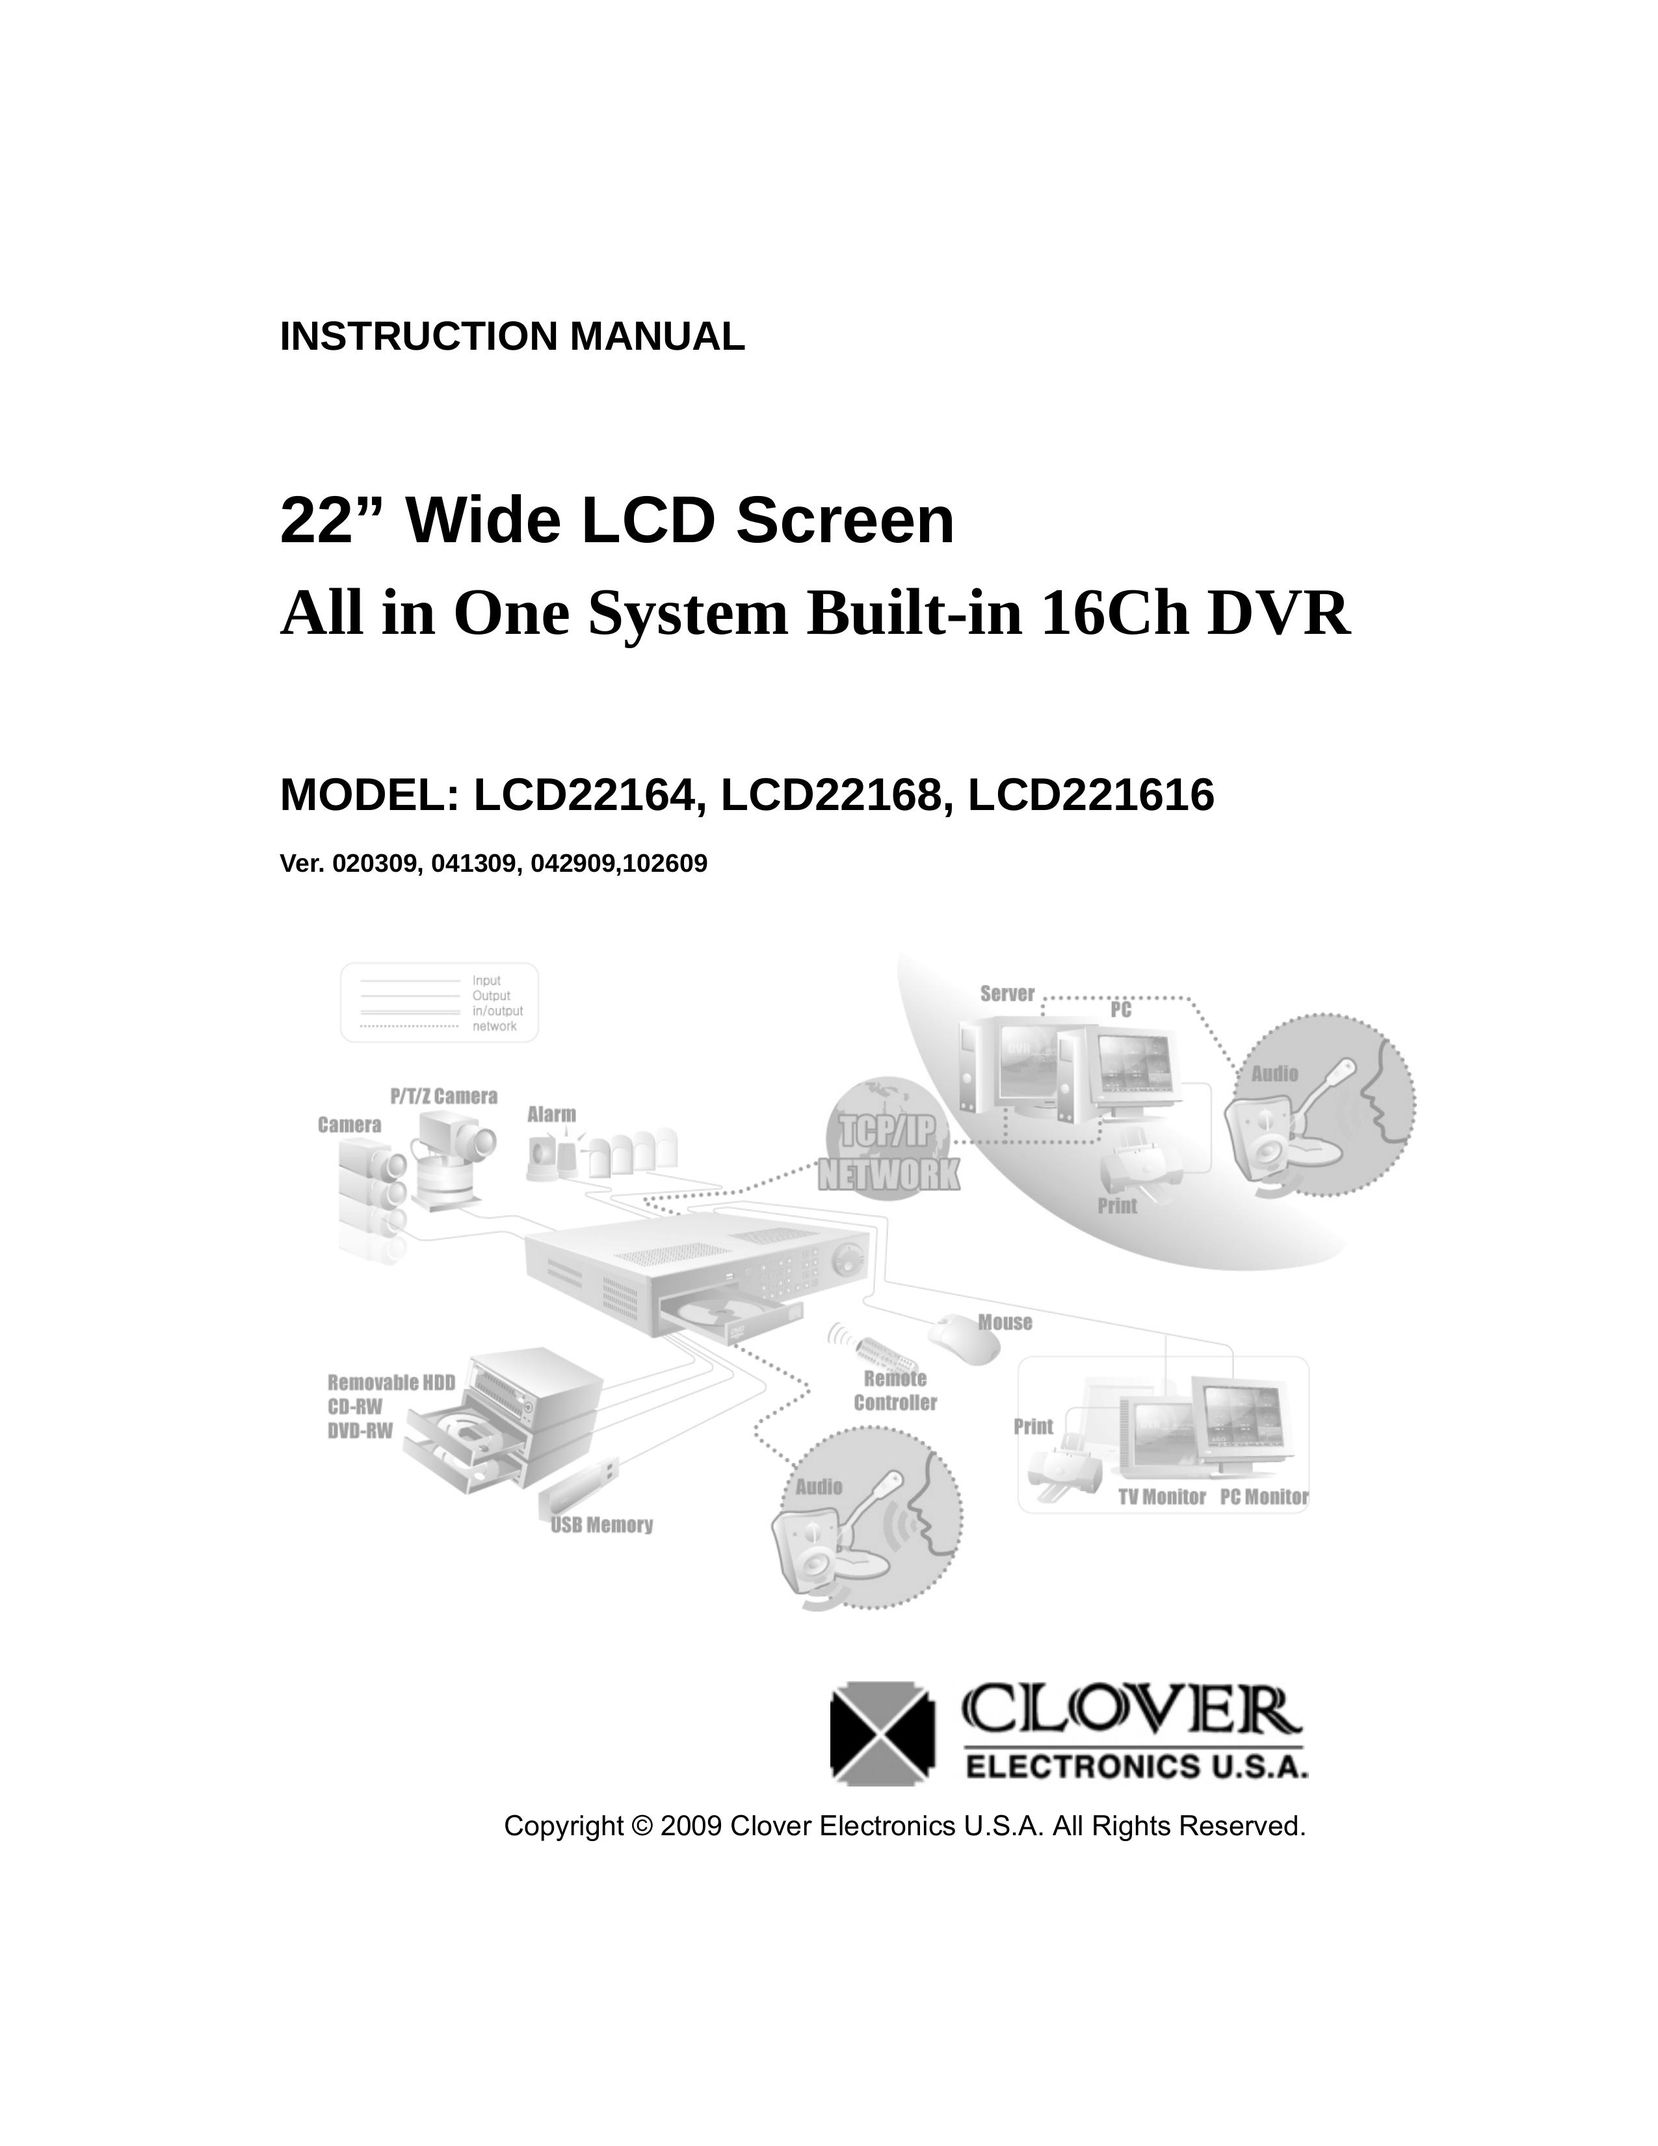 Clover Electronics LCD22168 DVR User Manual